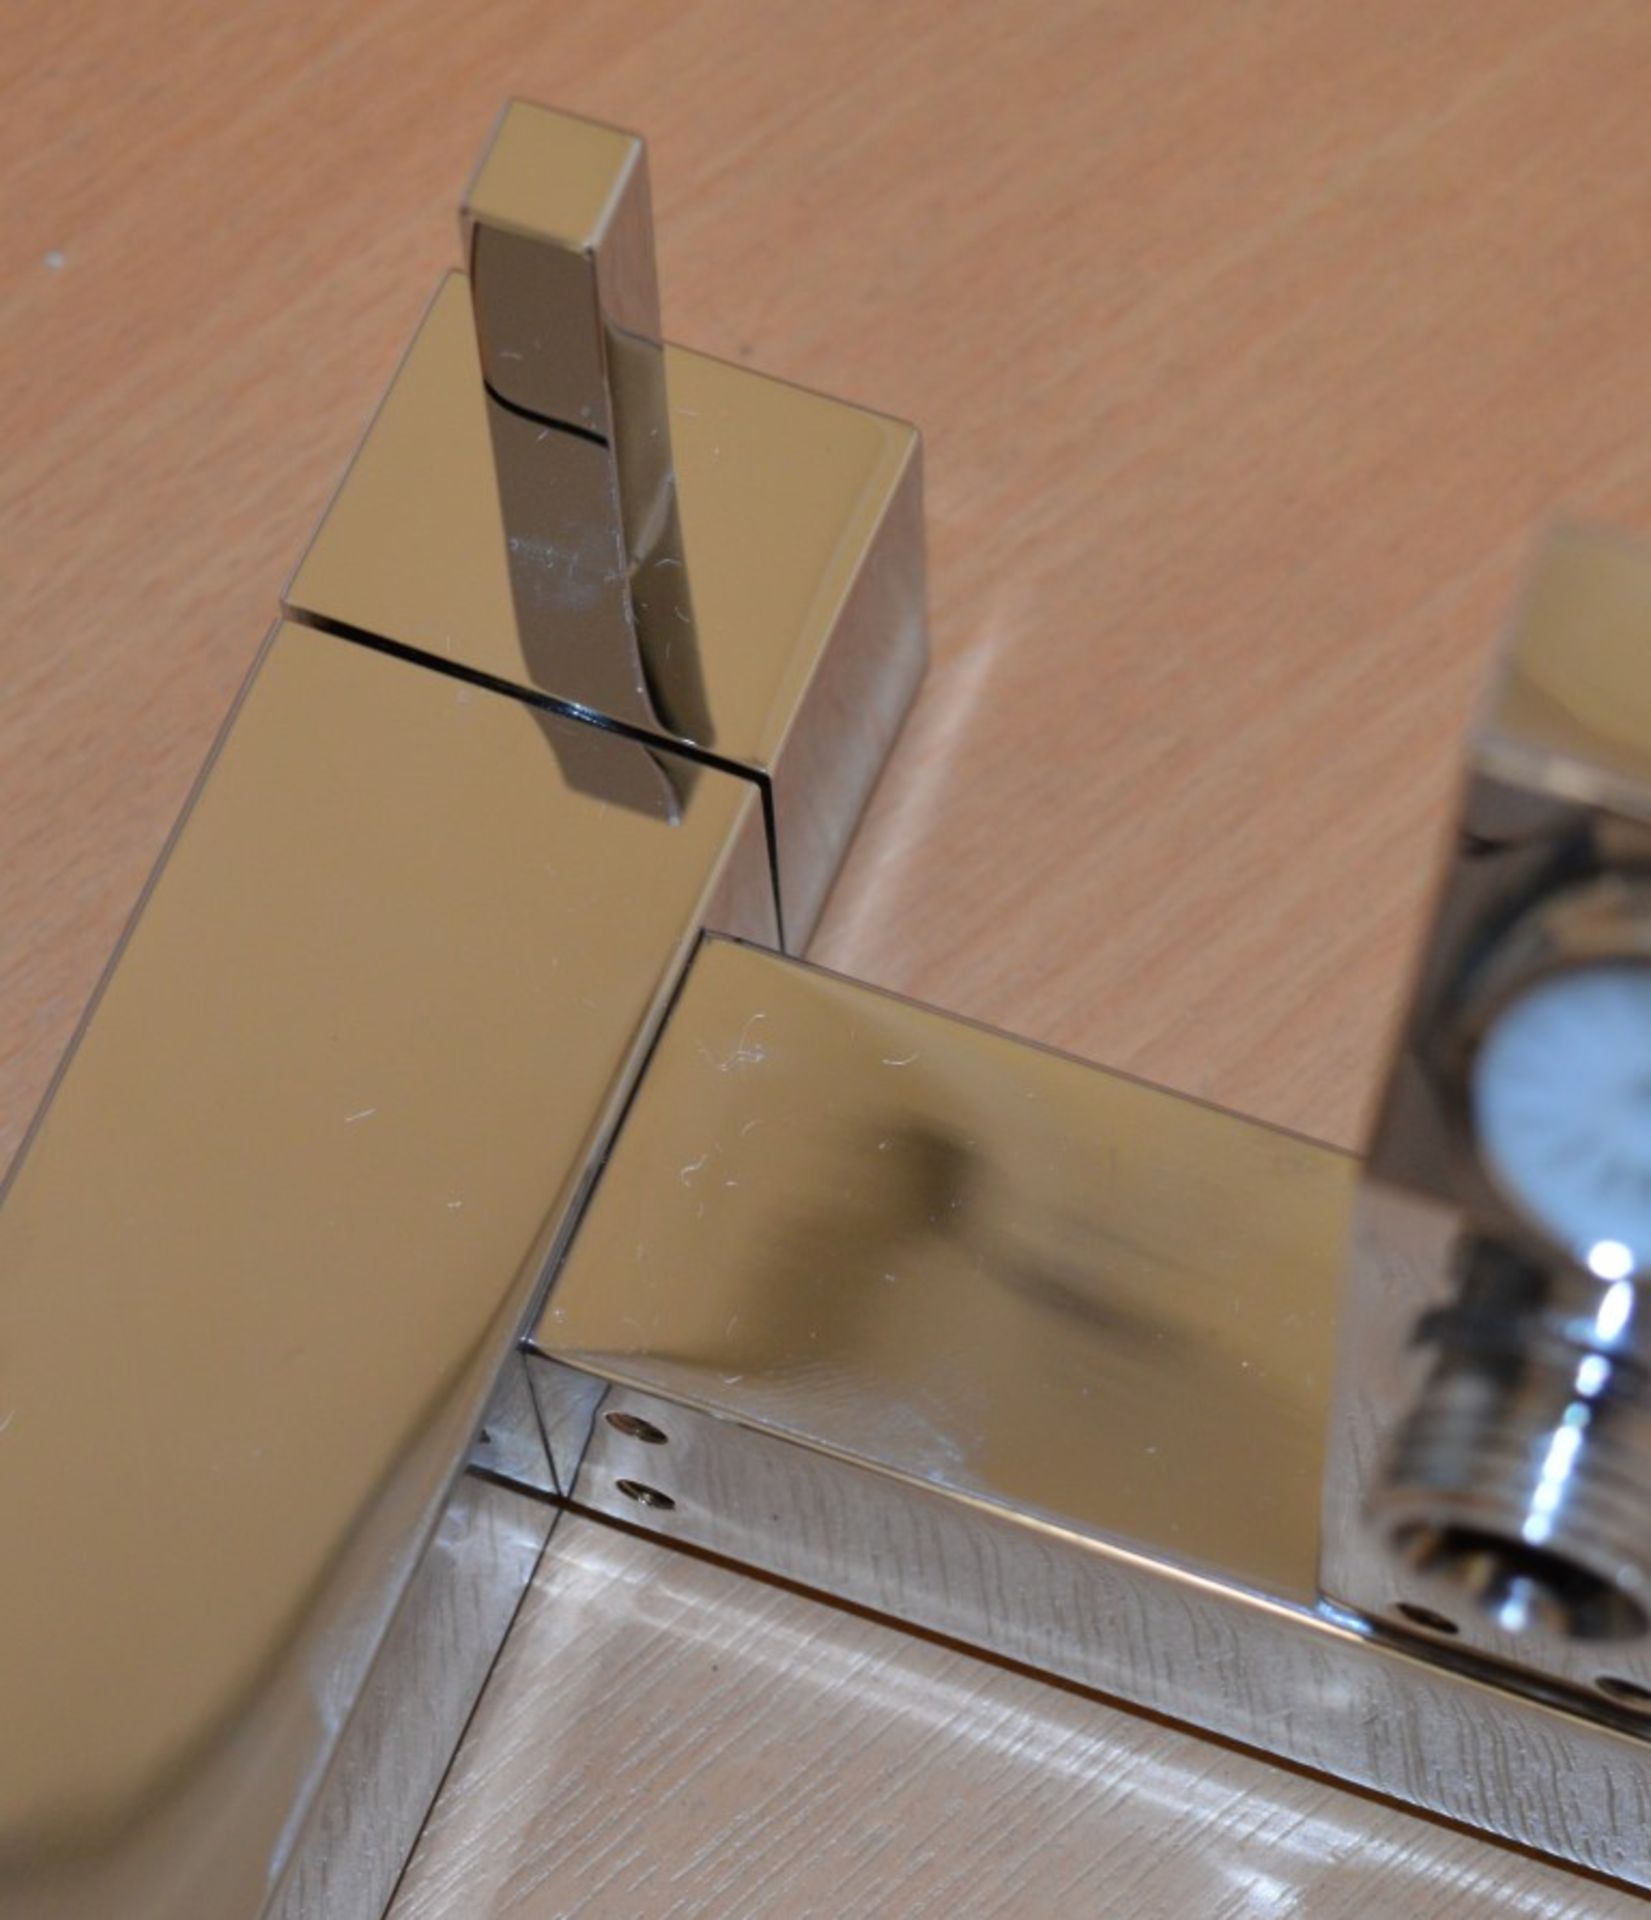 1 x Verona Deck Bath Shower Mixer Tap - Vogue Bathrooms - Modern Bath Mixer Tap in Bright Chrome - Image 5 of 16